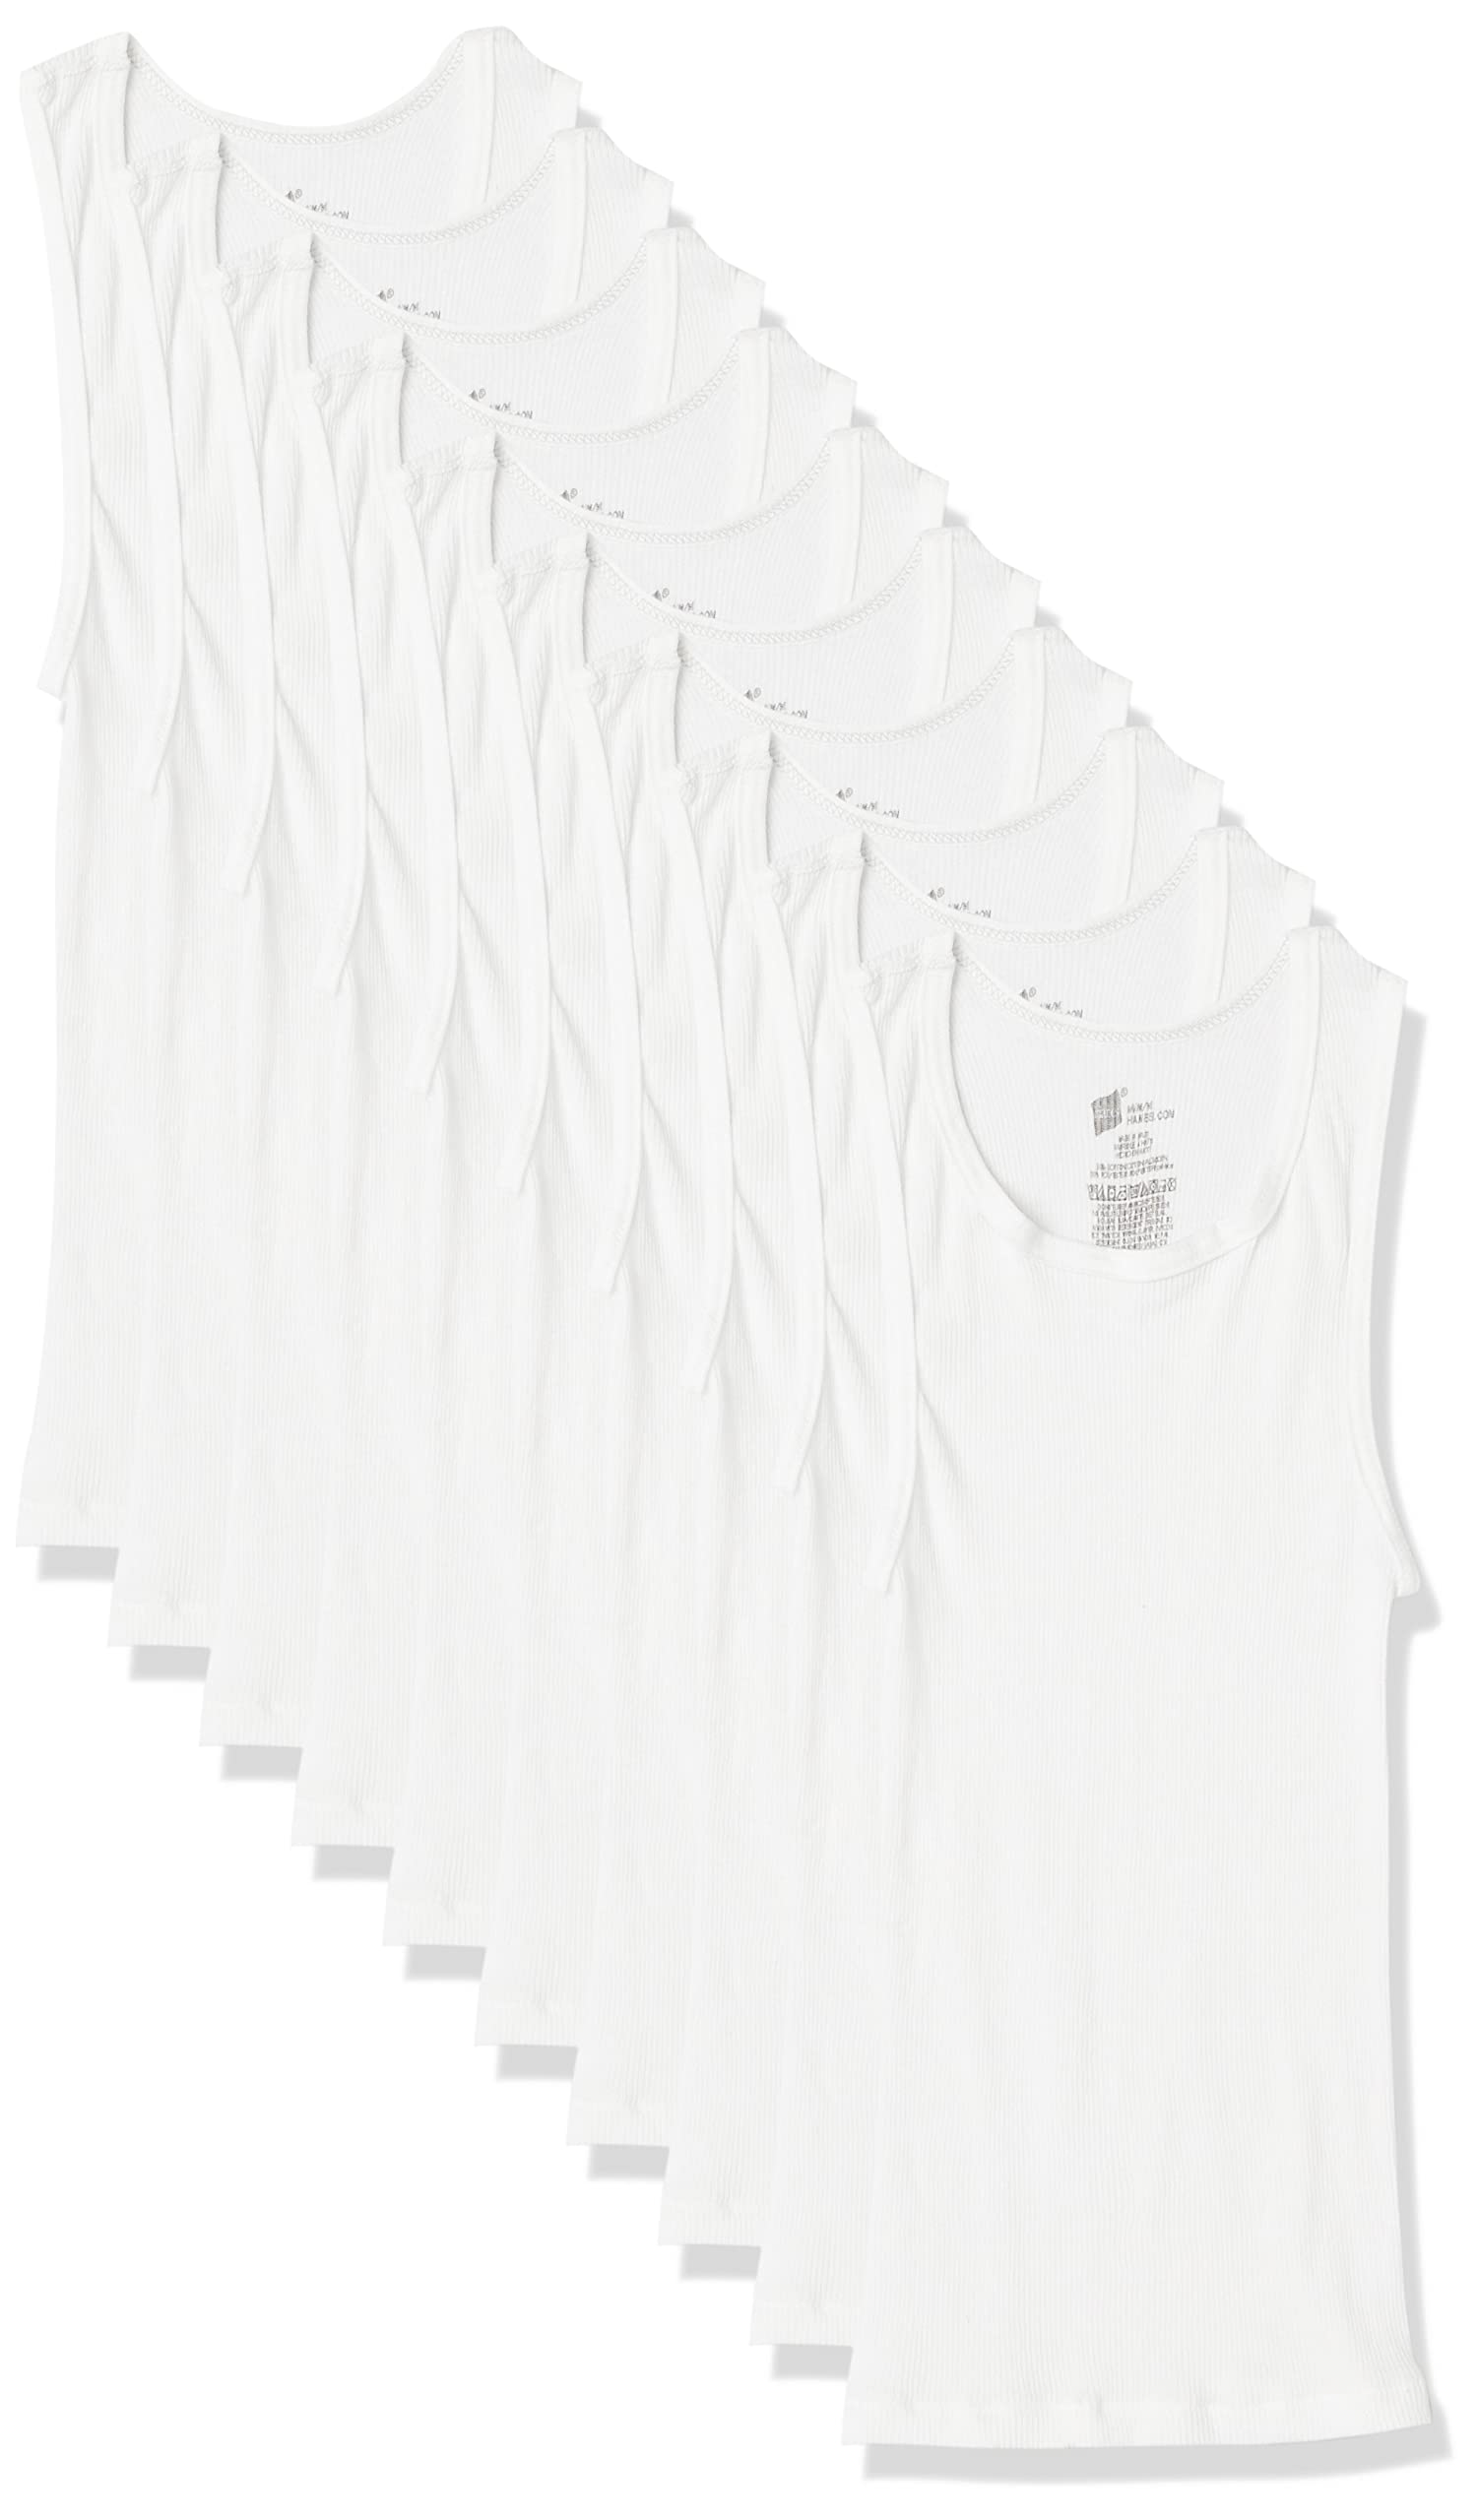 Hanes boys Ecosmart Cotton Tank Undershirt 10-Pack